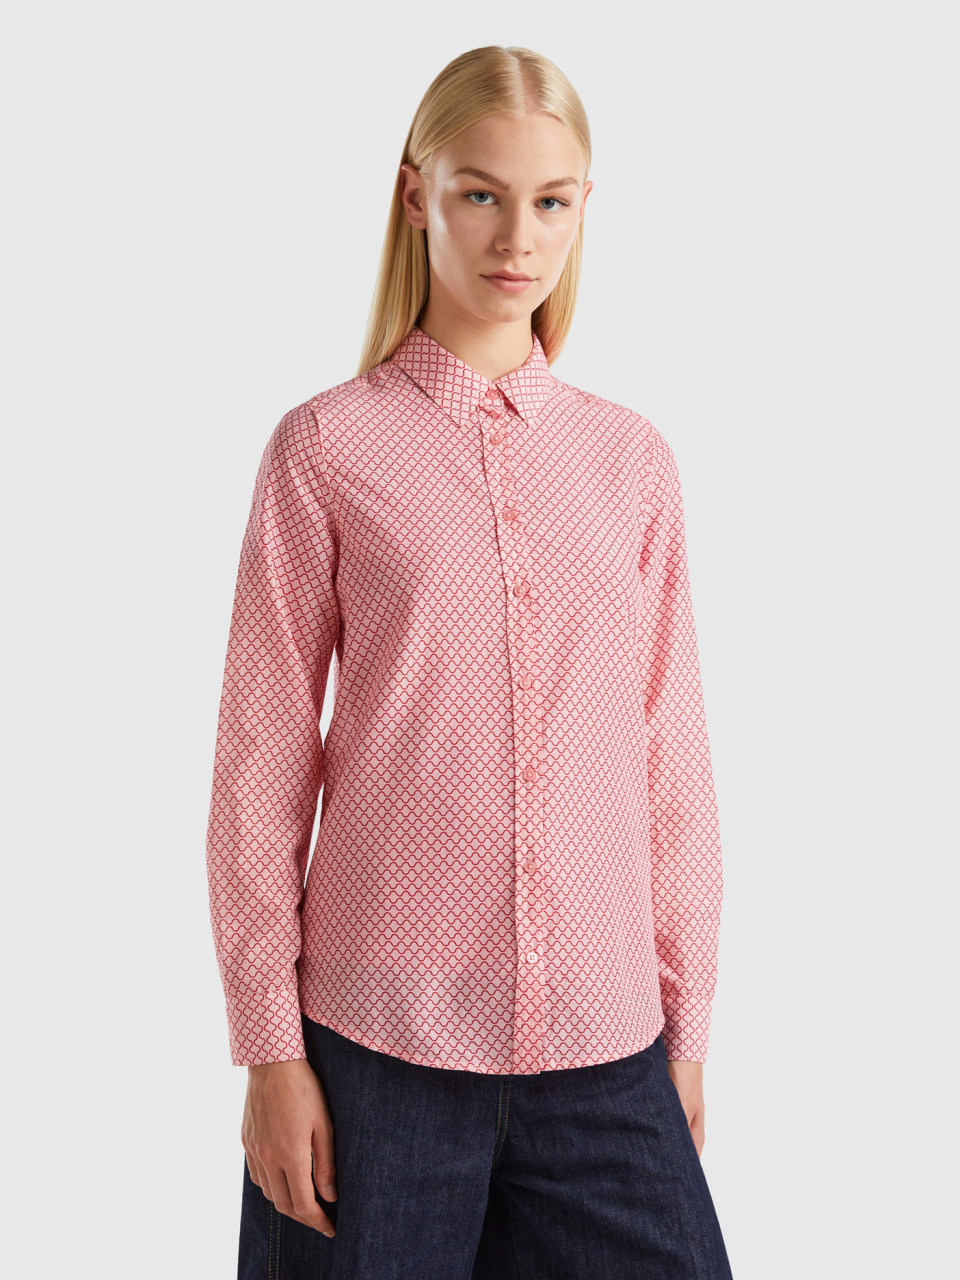 Benetton, Pink Diamond Pattern Shirt, Pink, Women